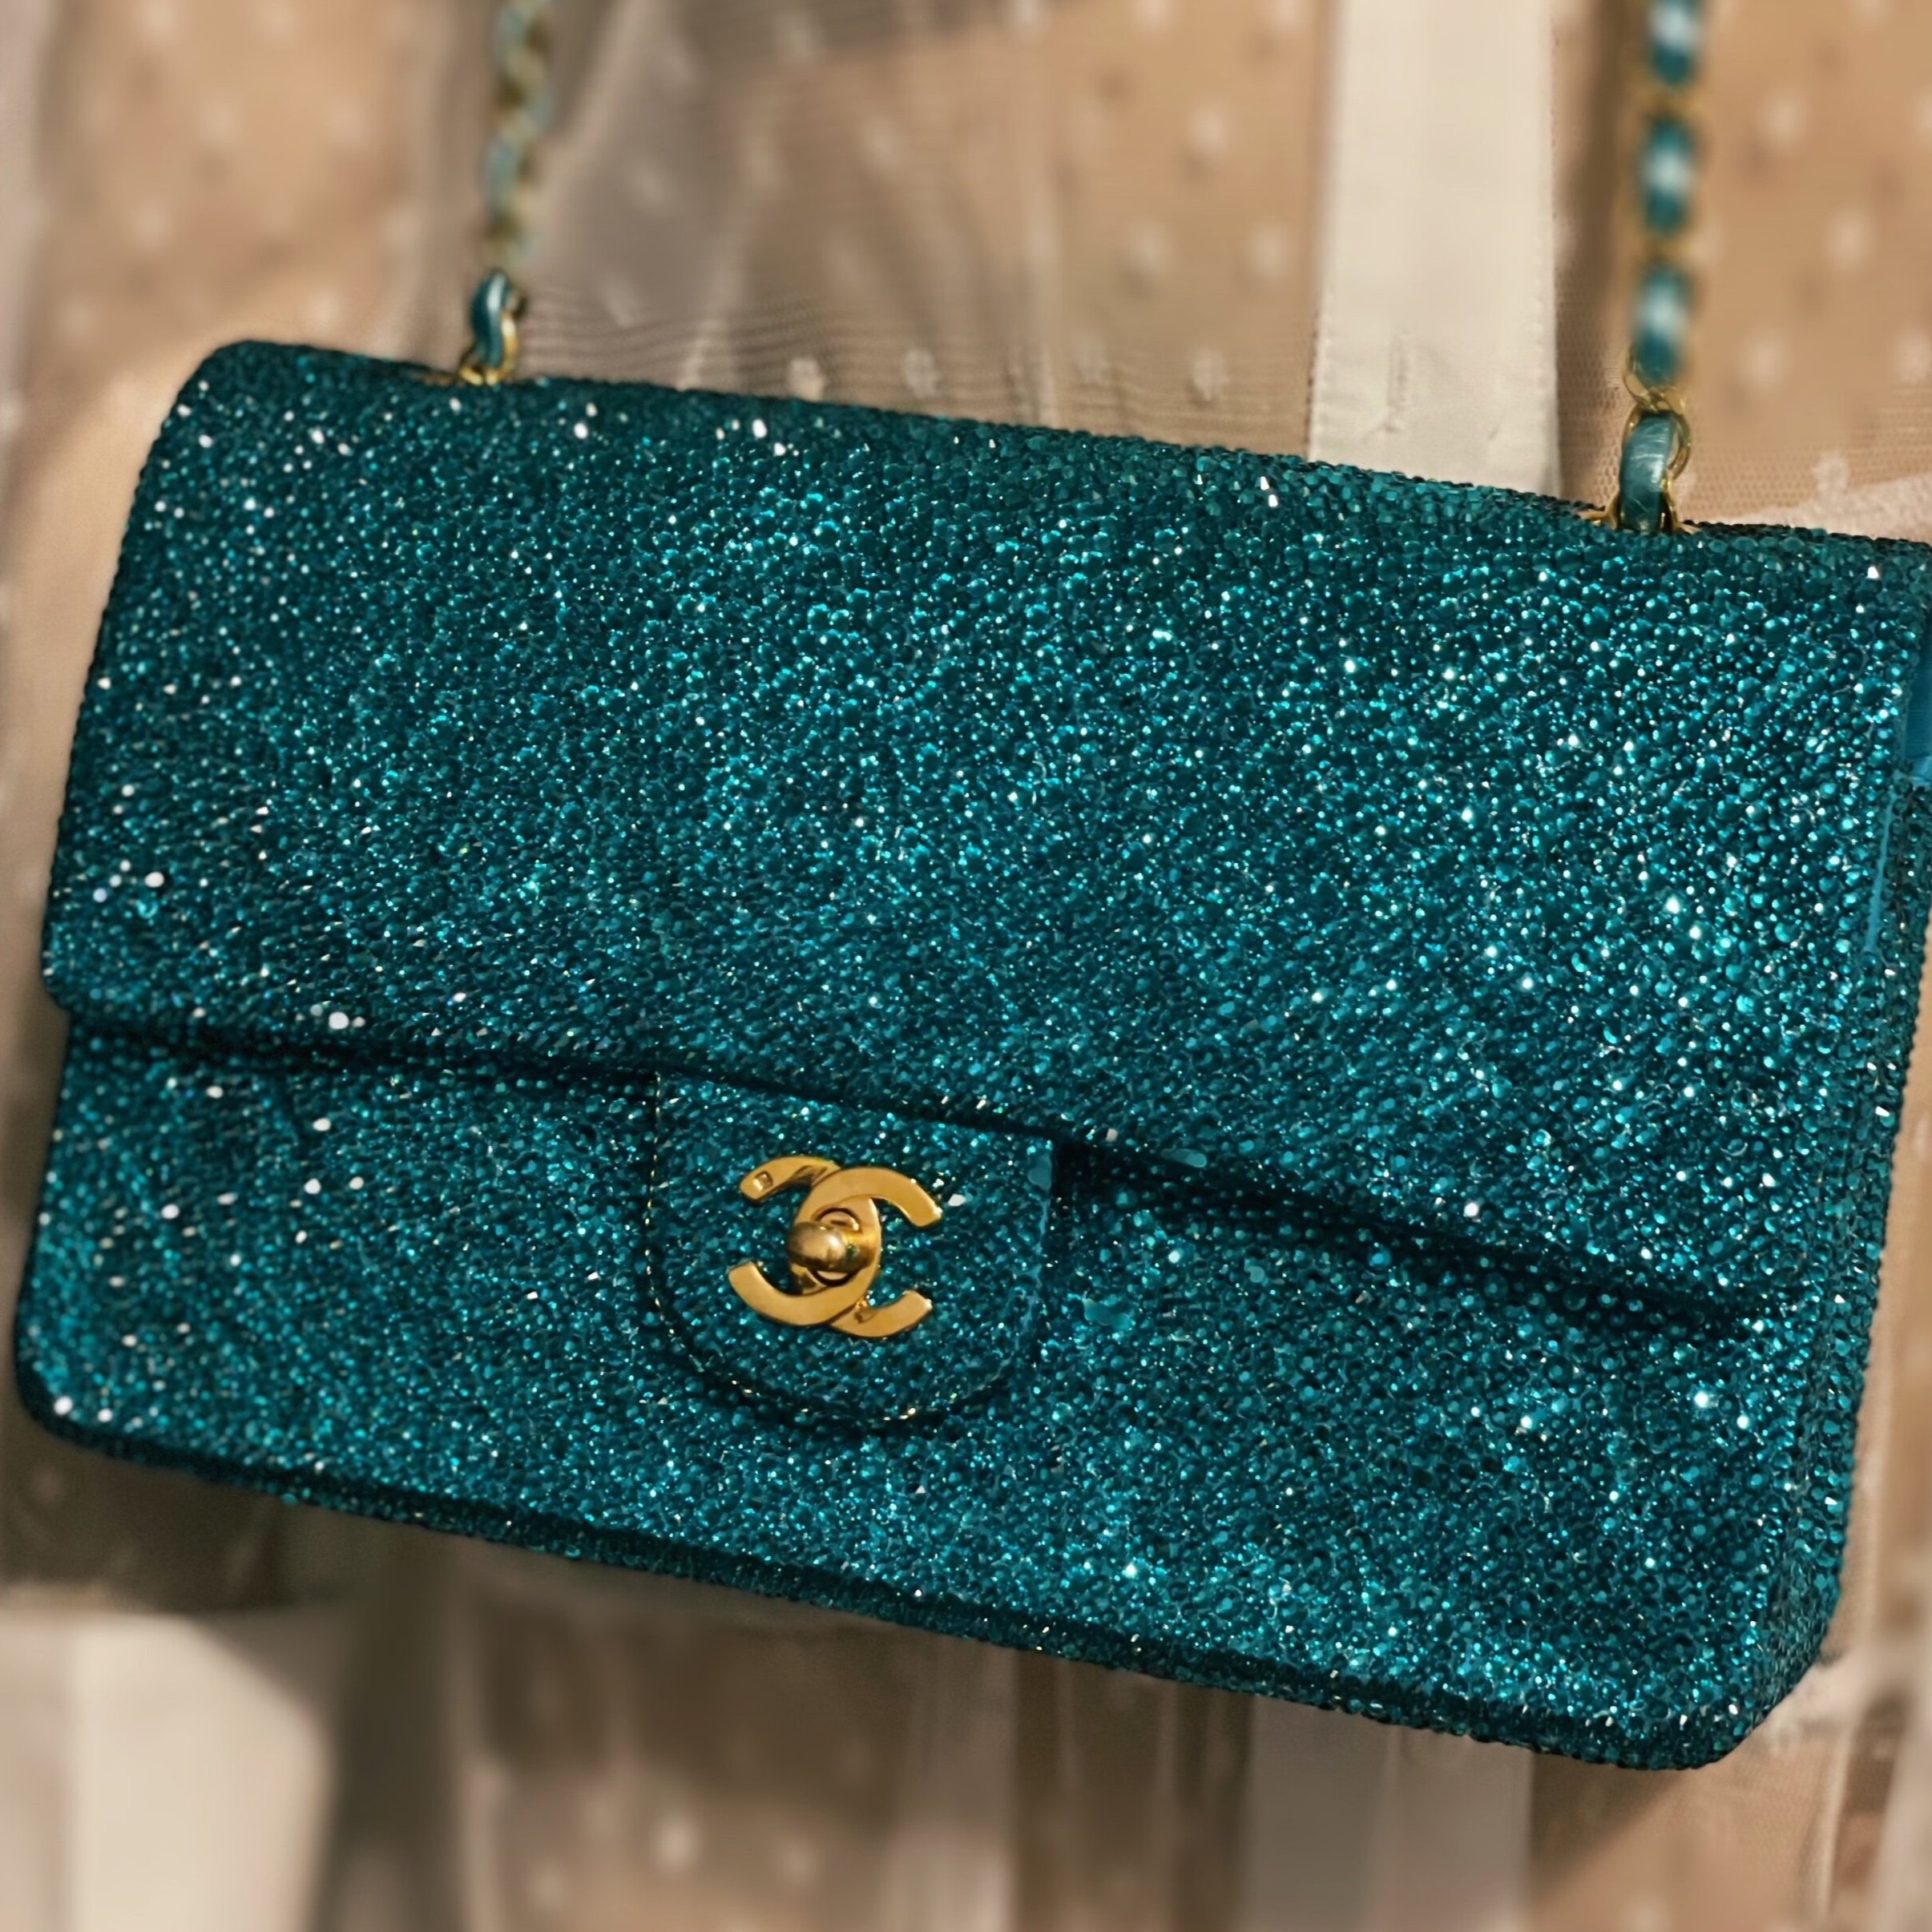 Chanel turquoise medium bag